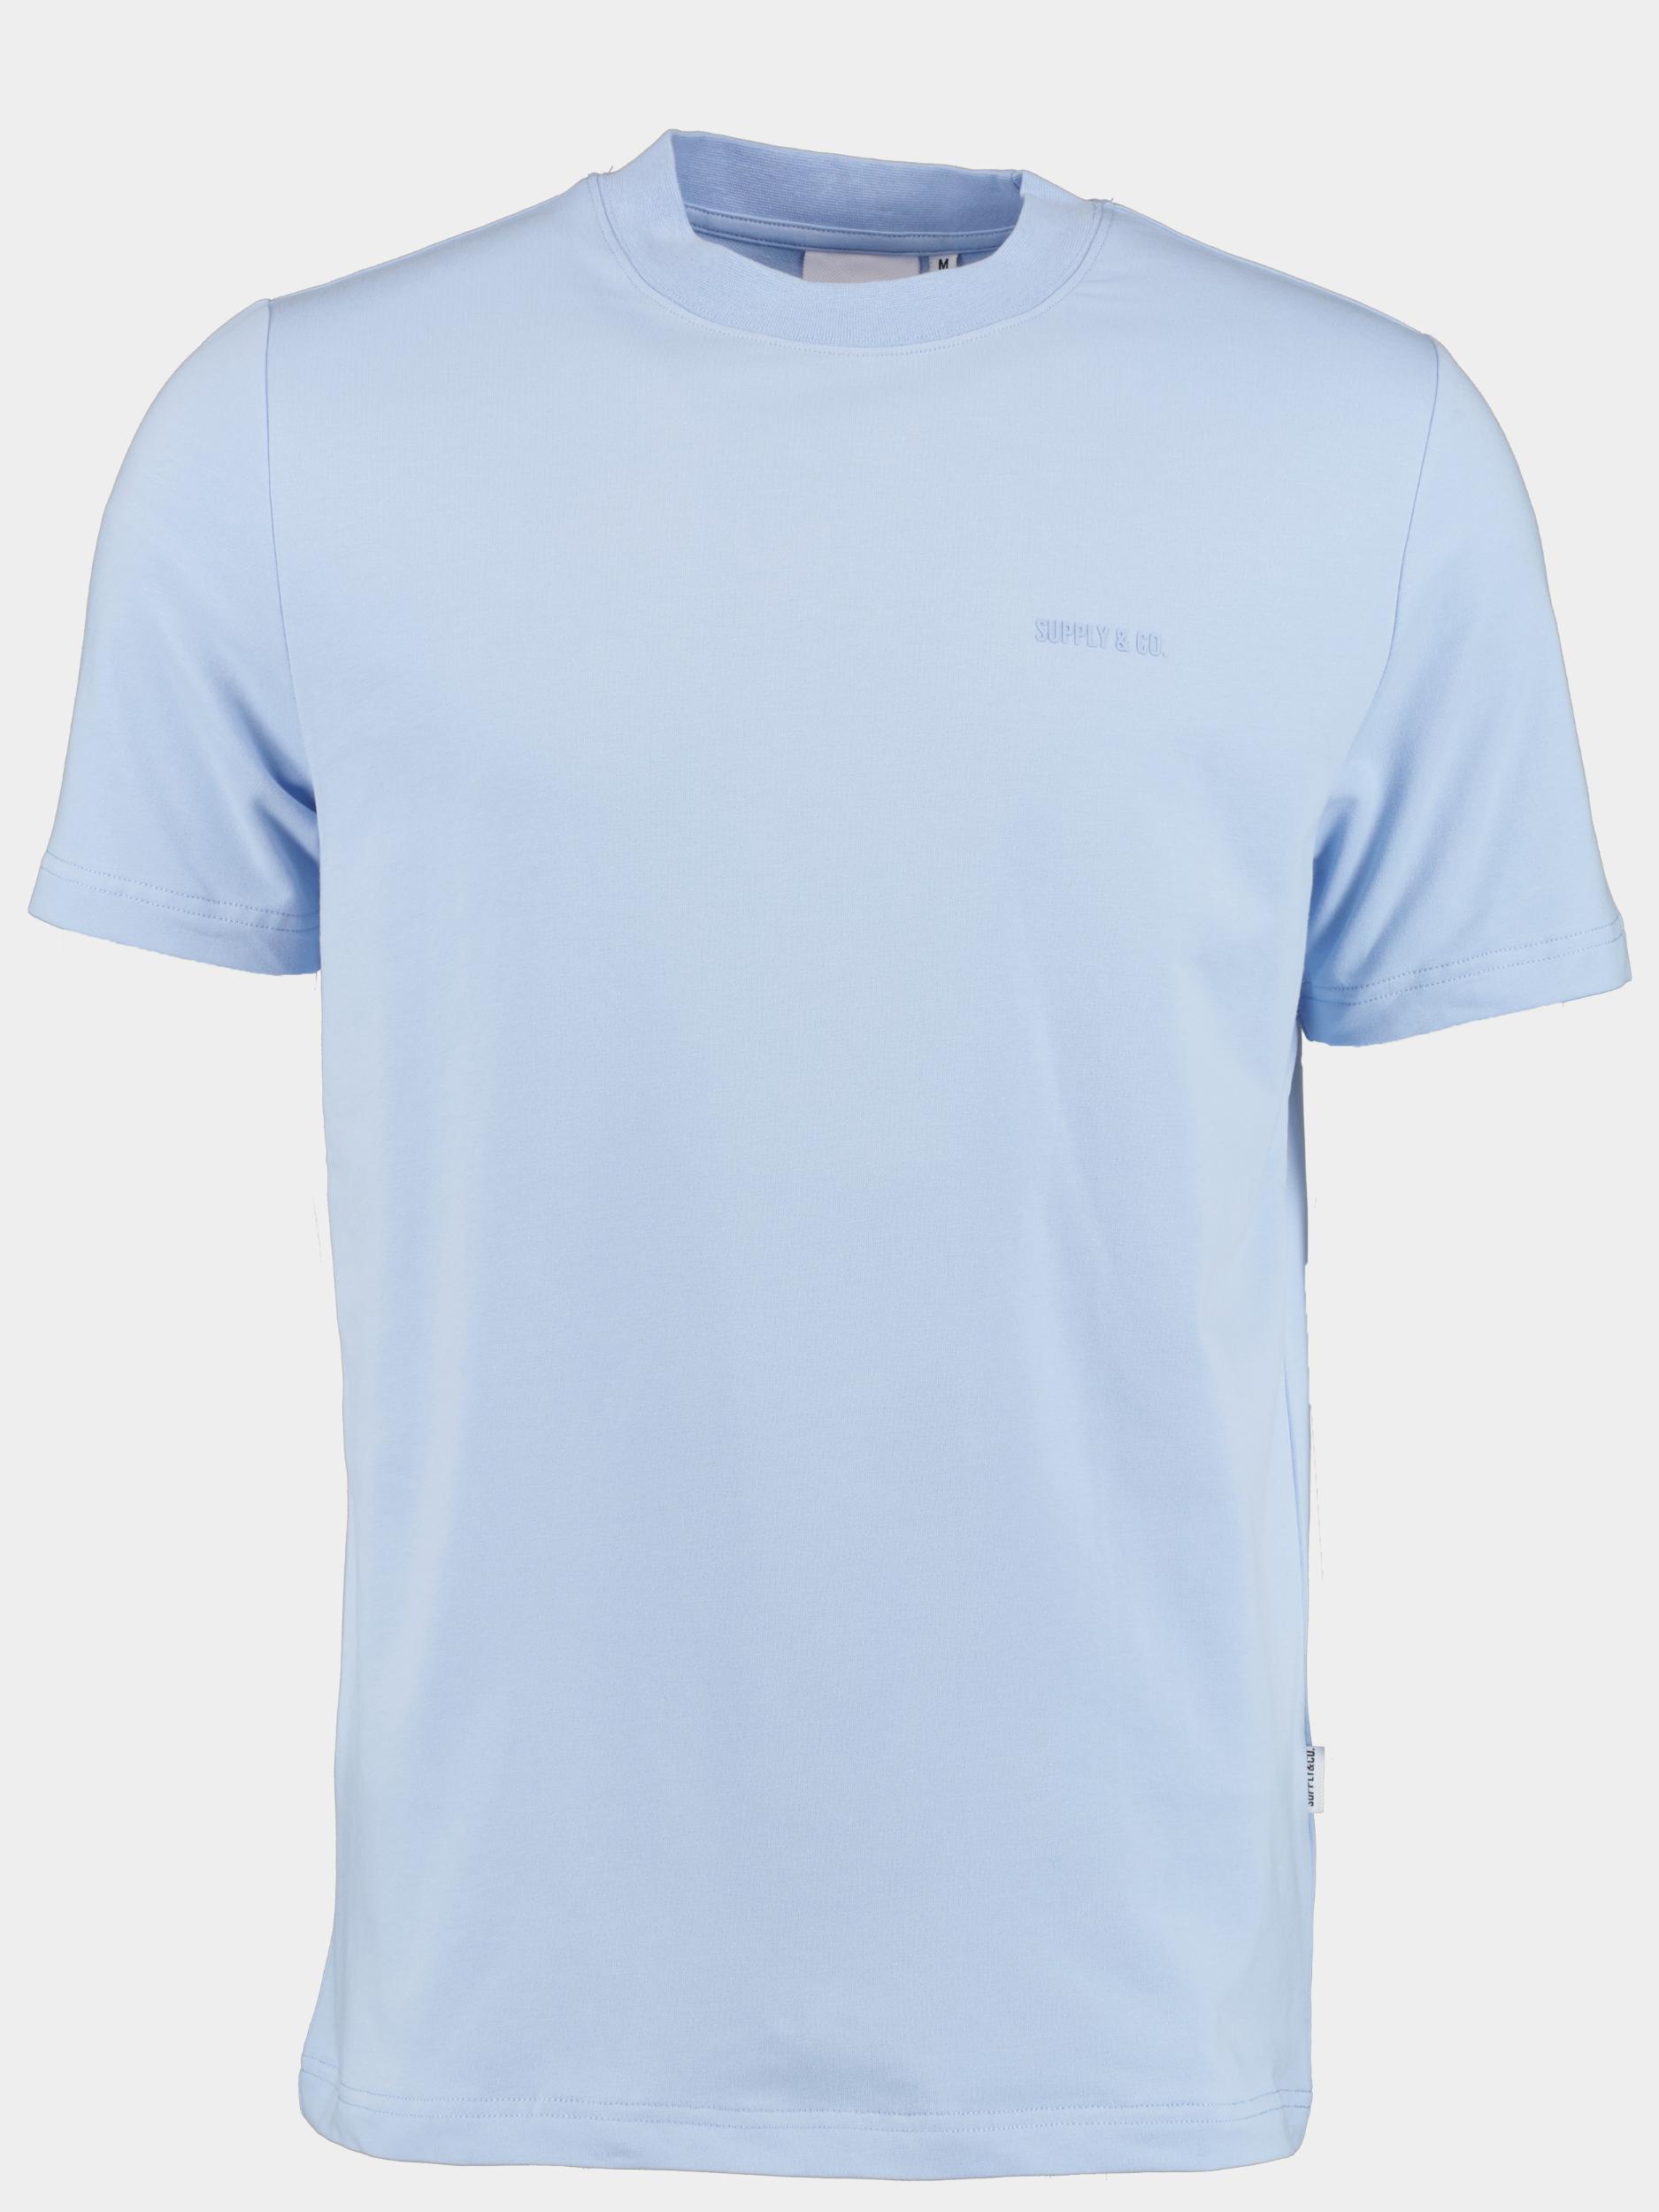 Supply & Co. T-shirt korte mouw Blauw Lungo Tee With Chestlogo 24108LU16/210 light blue